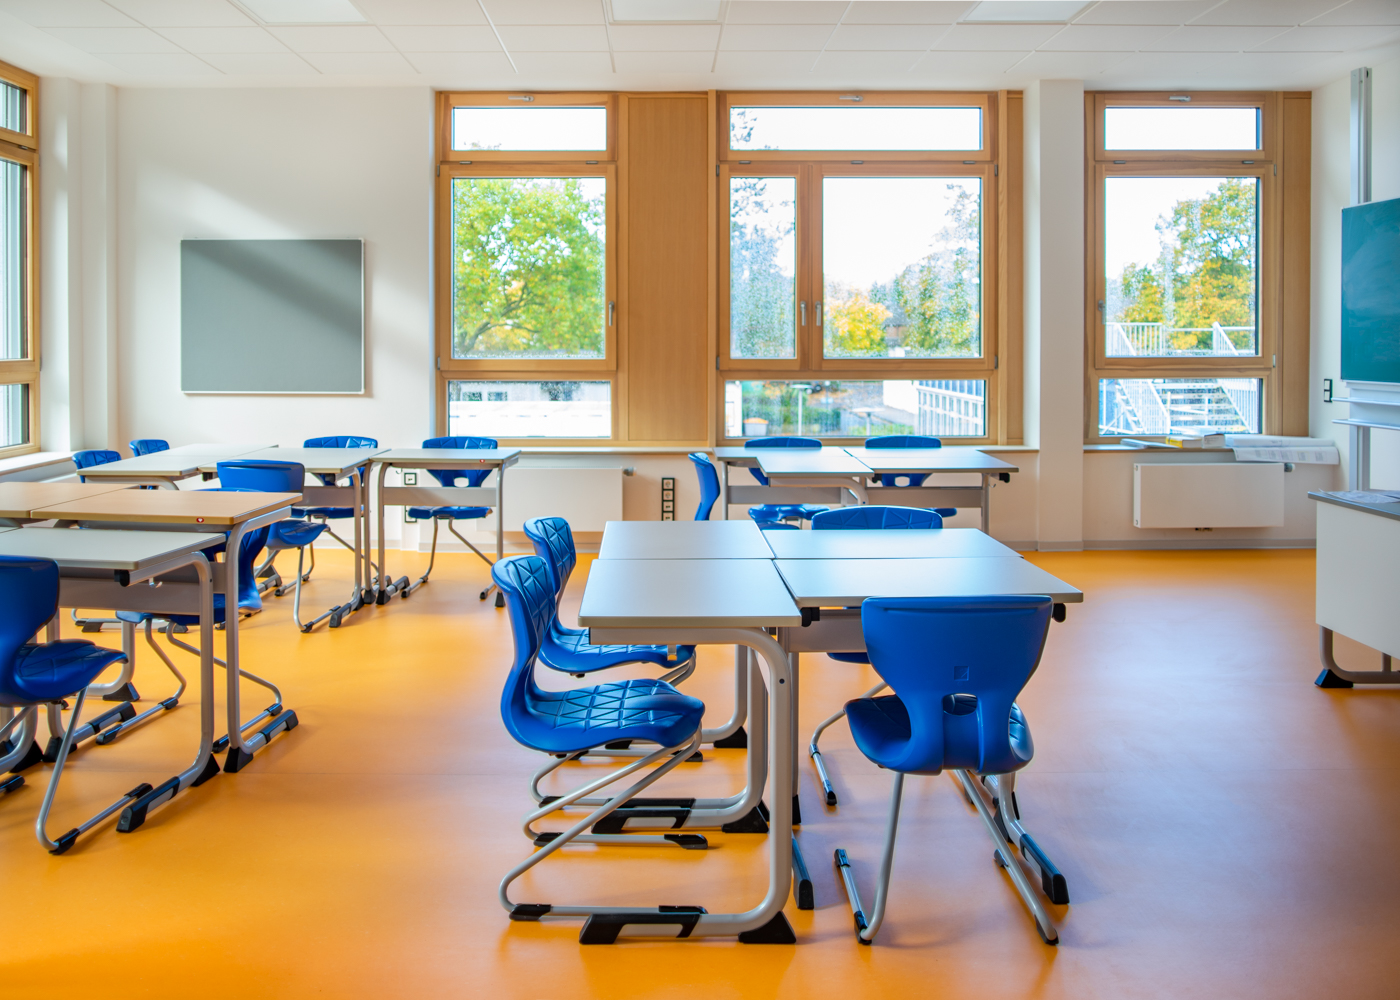 Klassenraum im Neubau der Johann-Camenius-Schule in Pinneberg